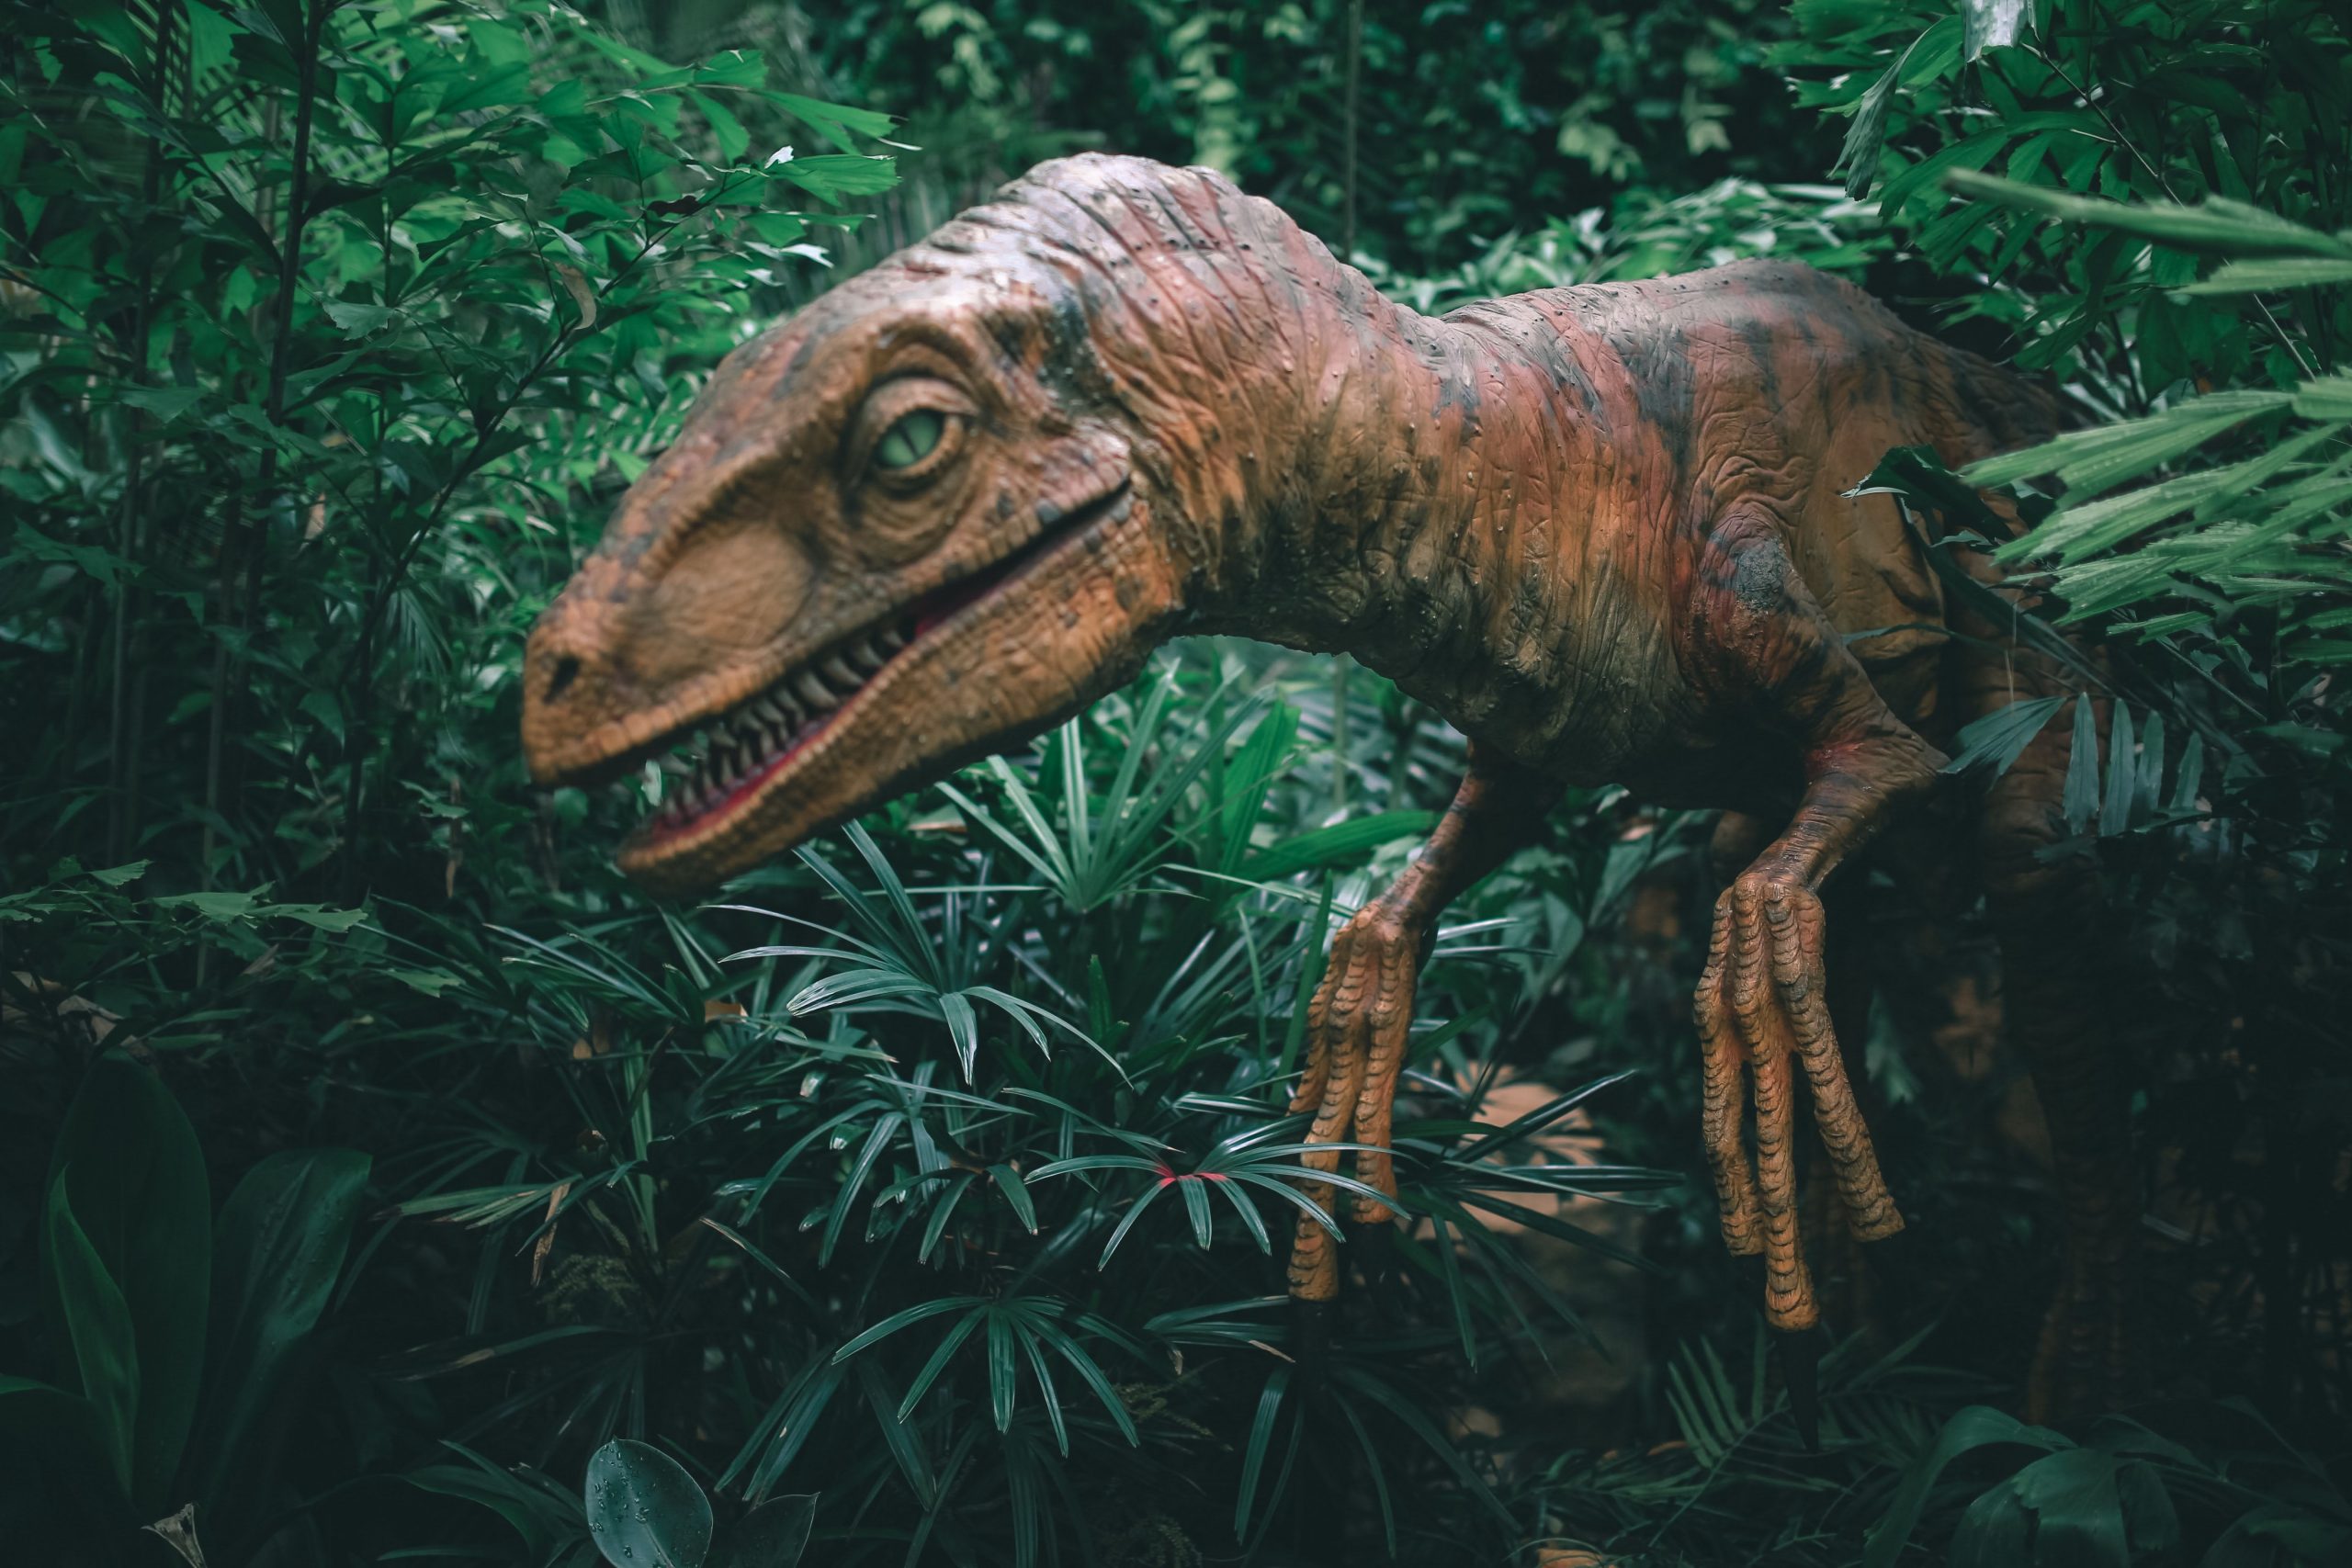 Skeleton of new dinosaur species unearthed in Missouri